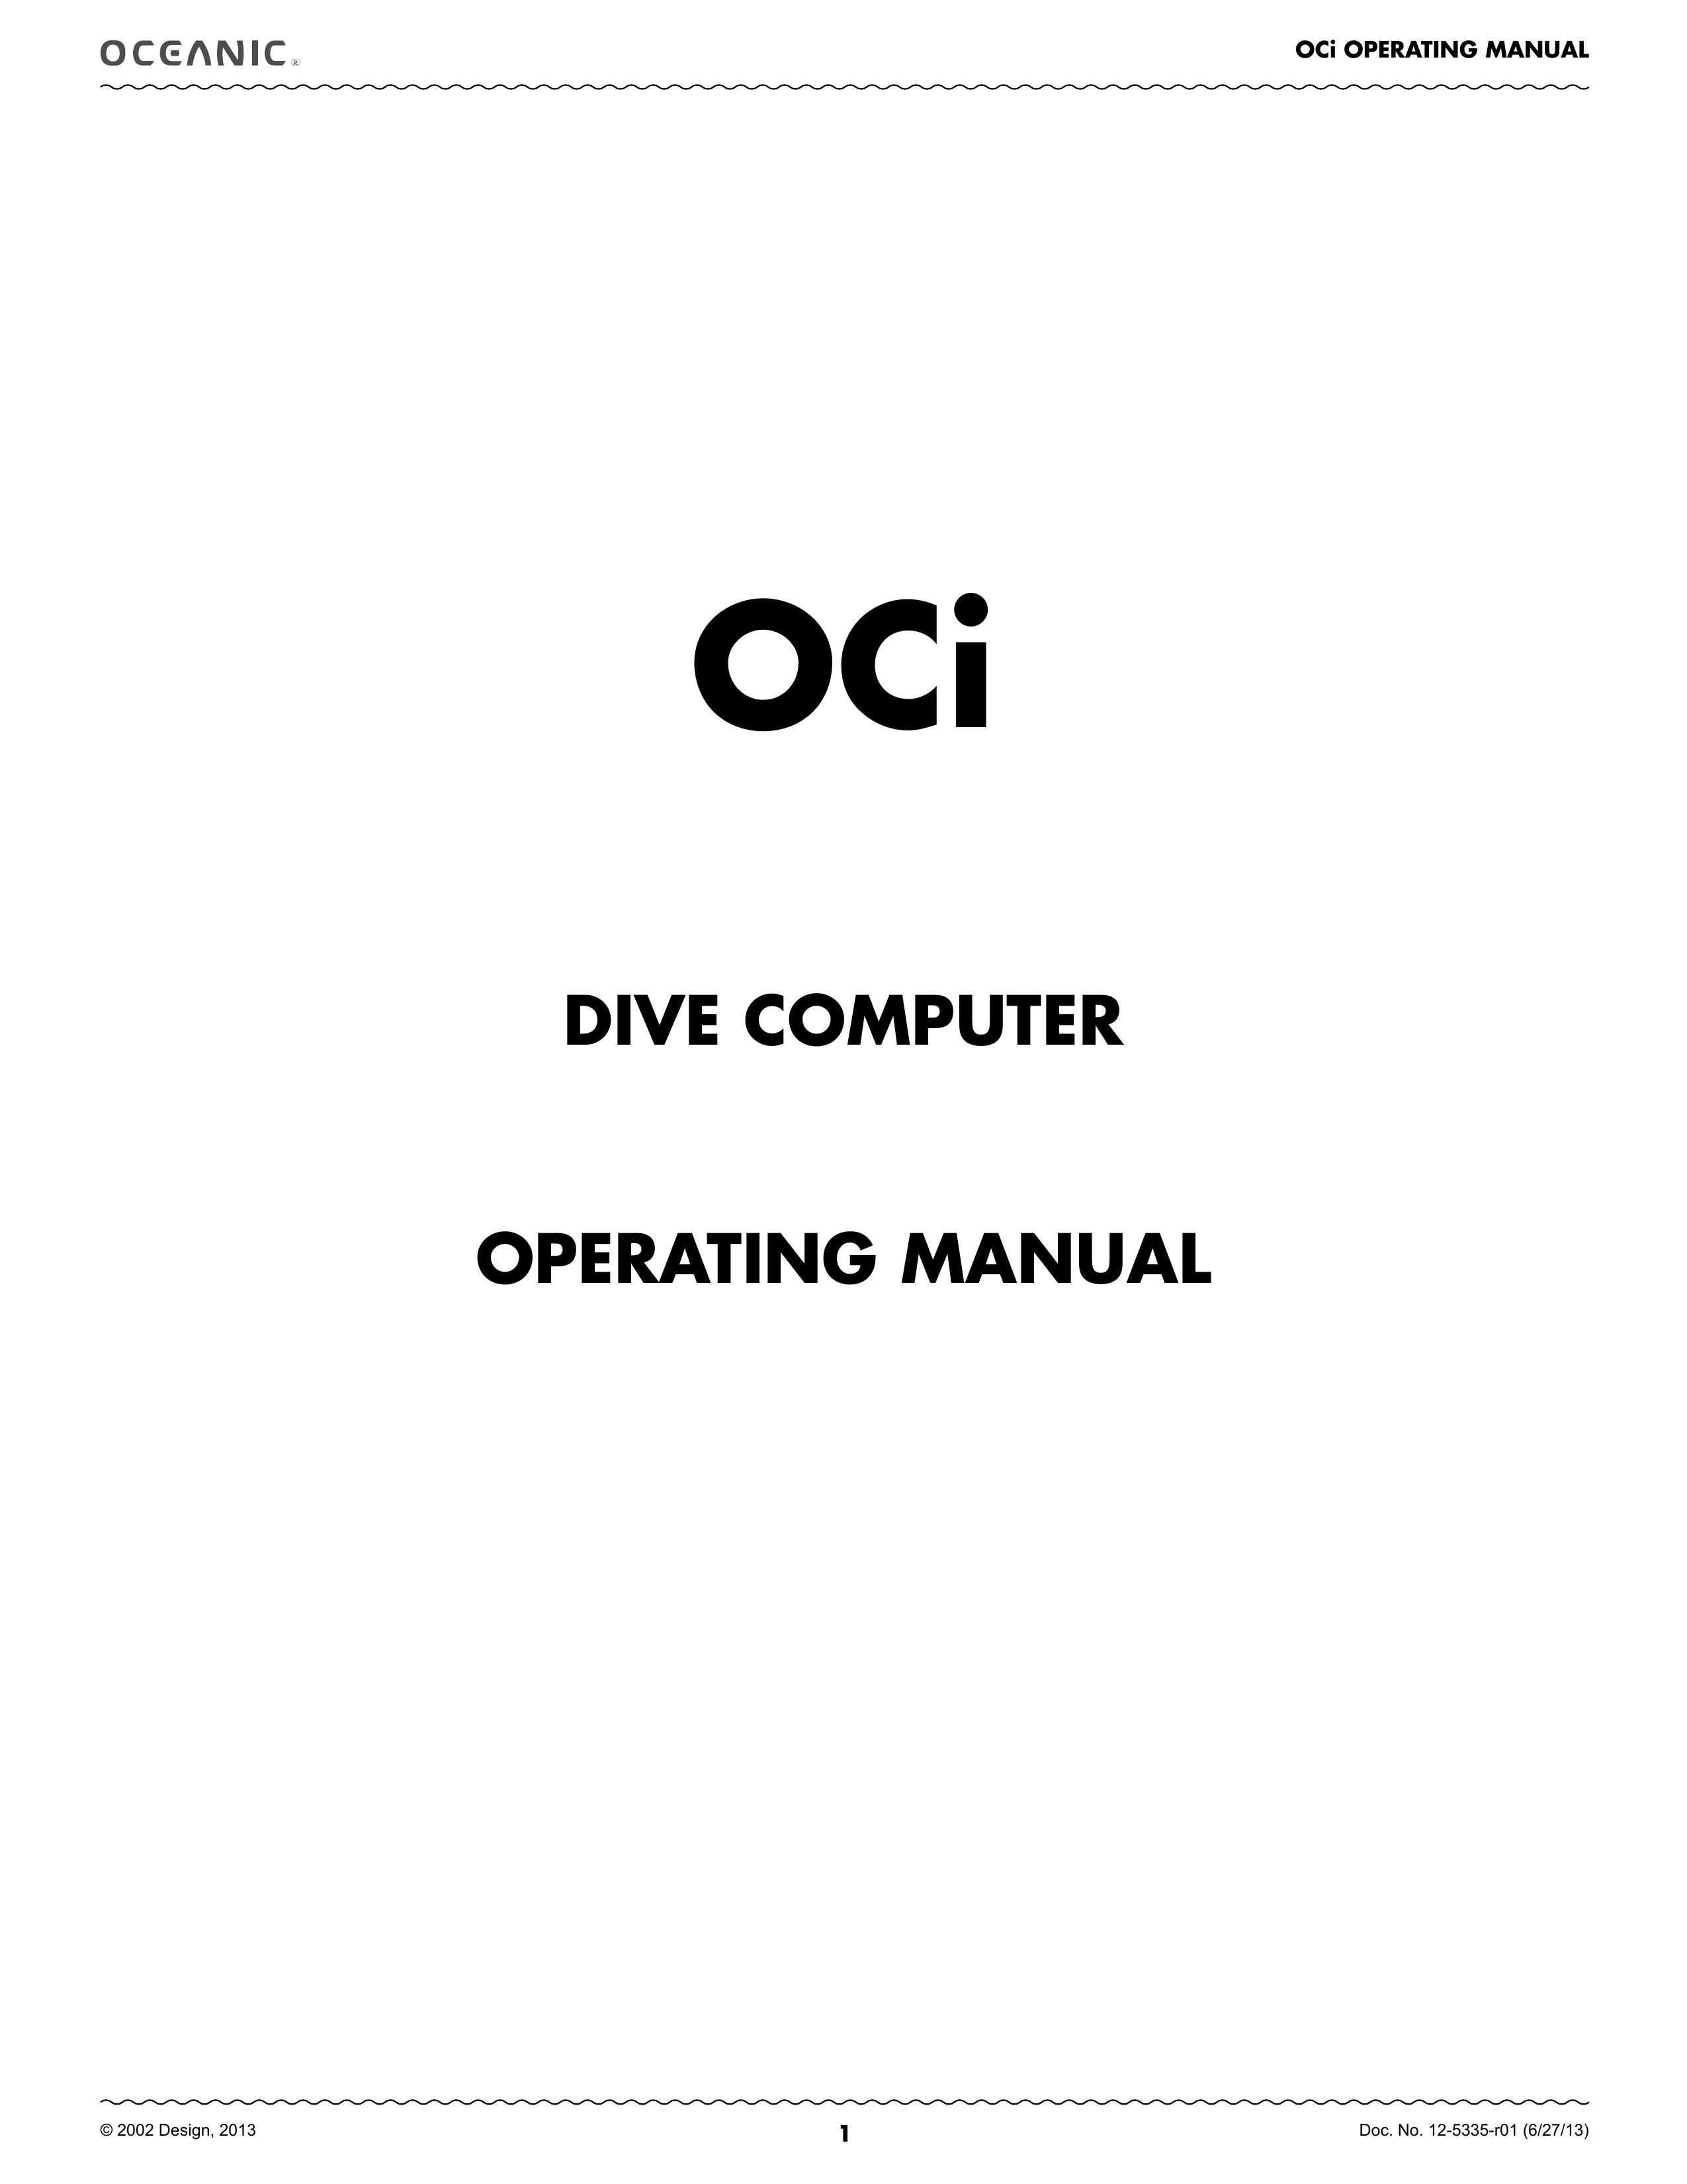 Oceanic 04-8791-79 Scuba Diving Equipment User Manual